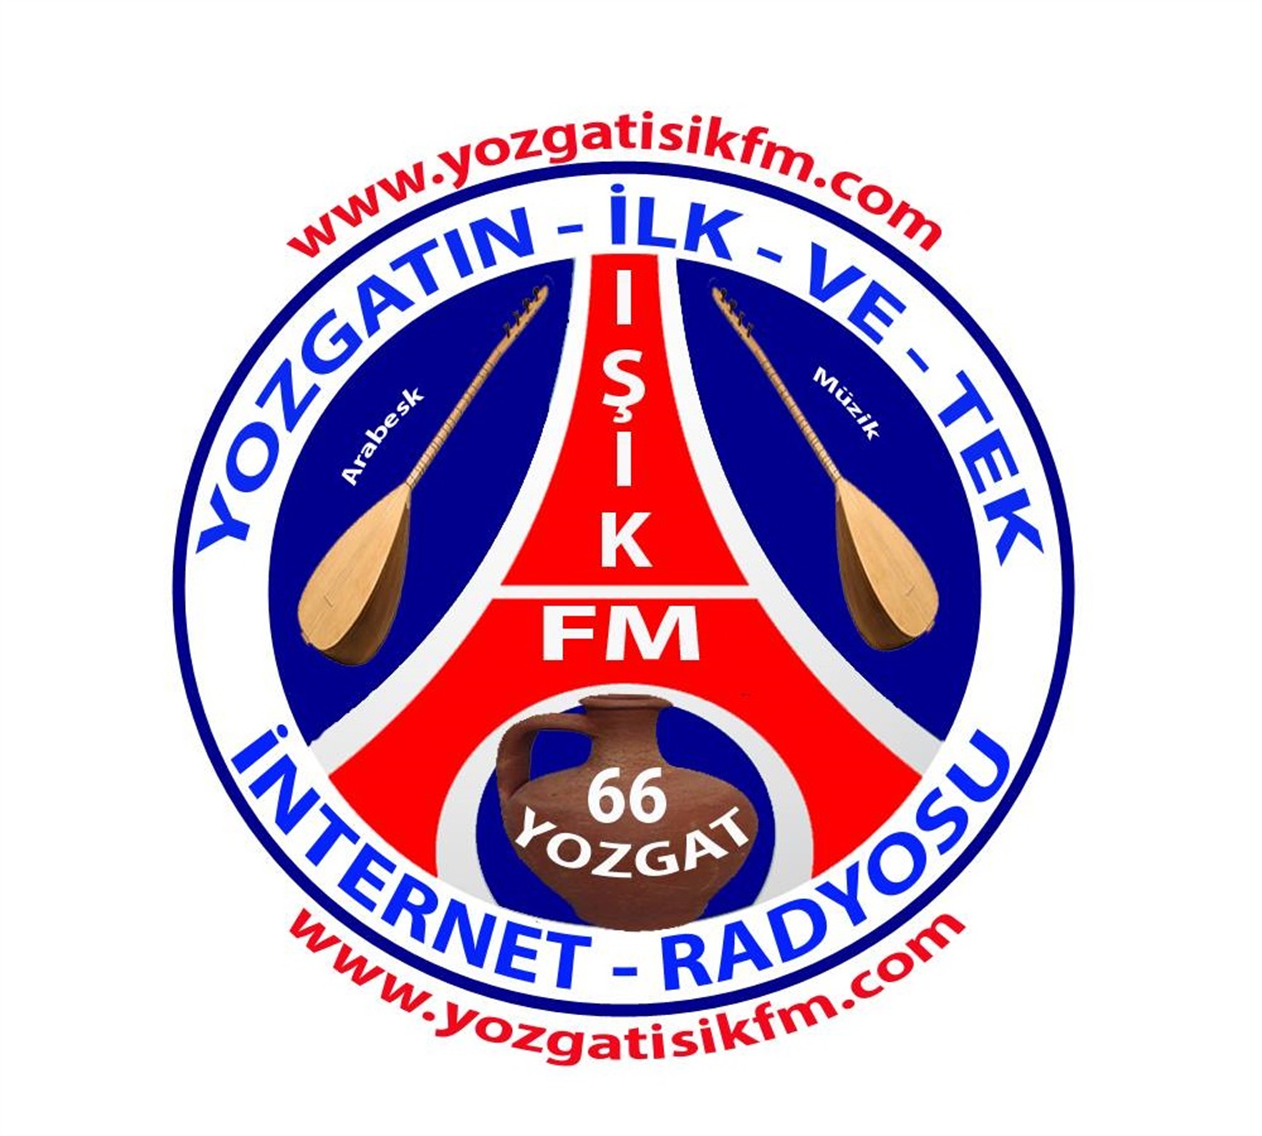 YOZGAT IŞIK FM